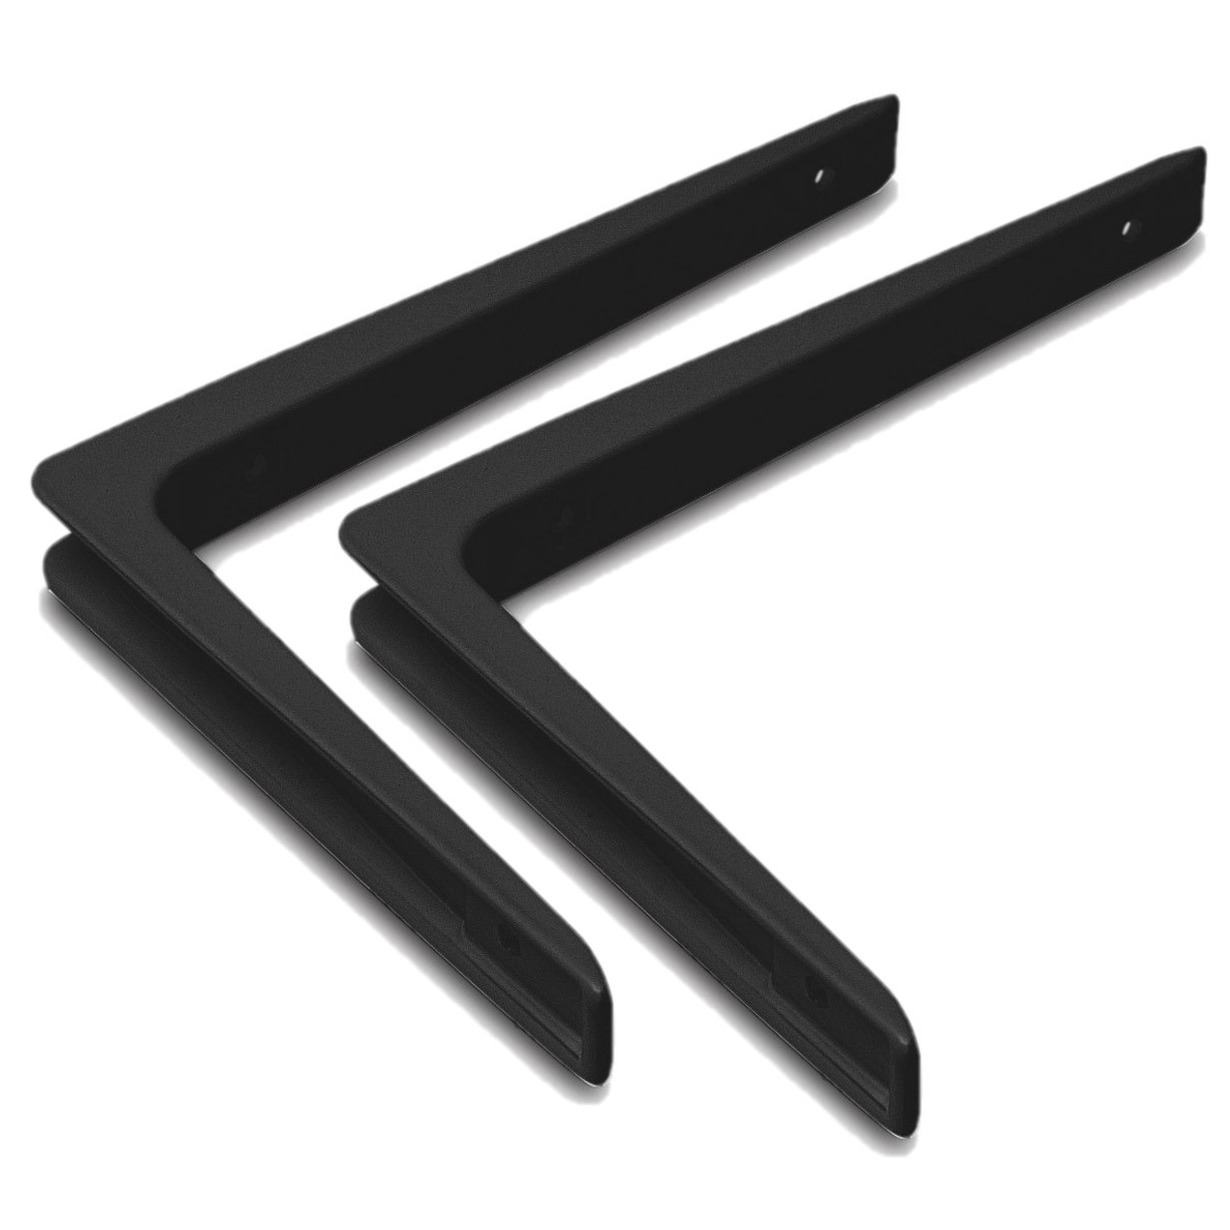 Set van 2x stuks planksteunen-plankdragers zwart gelakt aluminium 30 x 20 cm tot 80 kilo